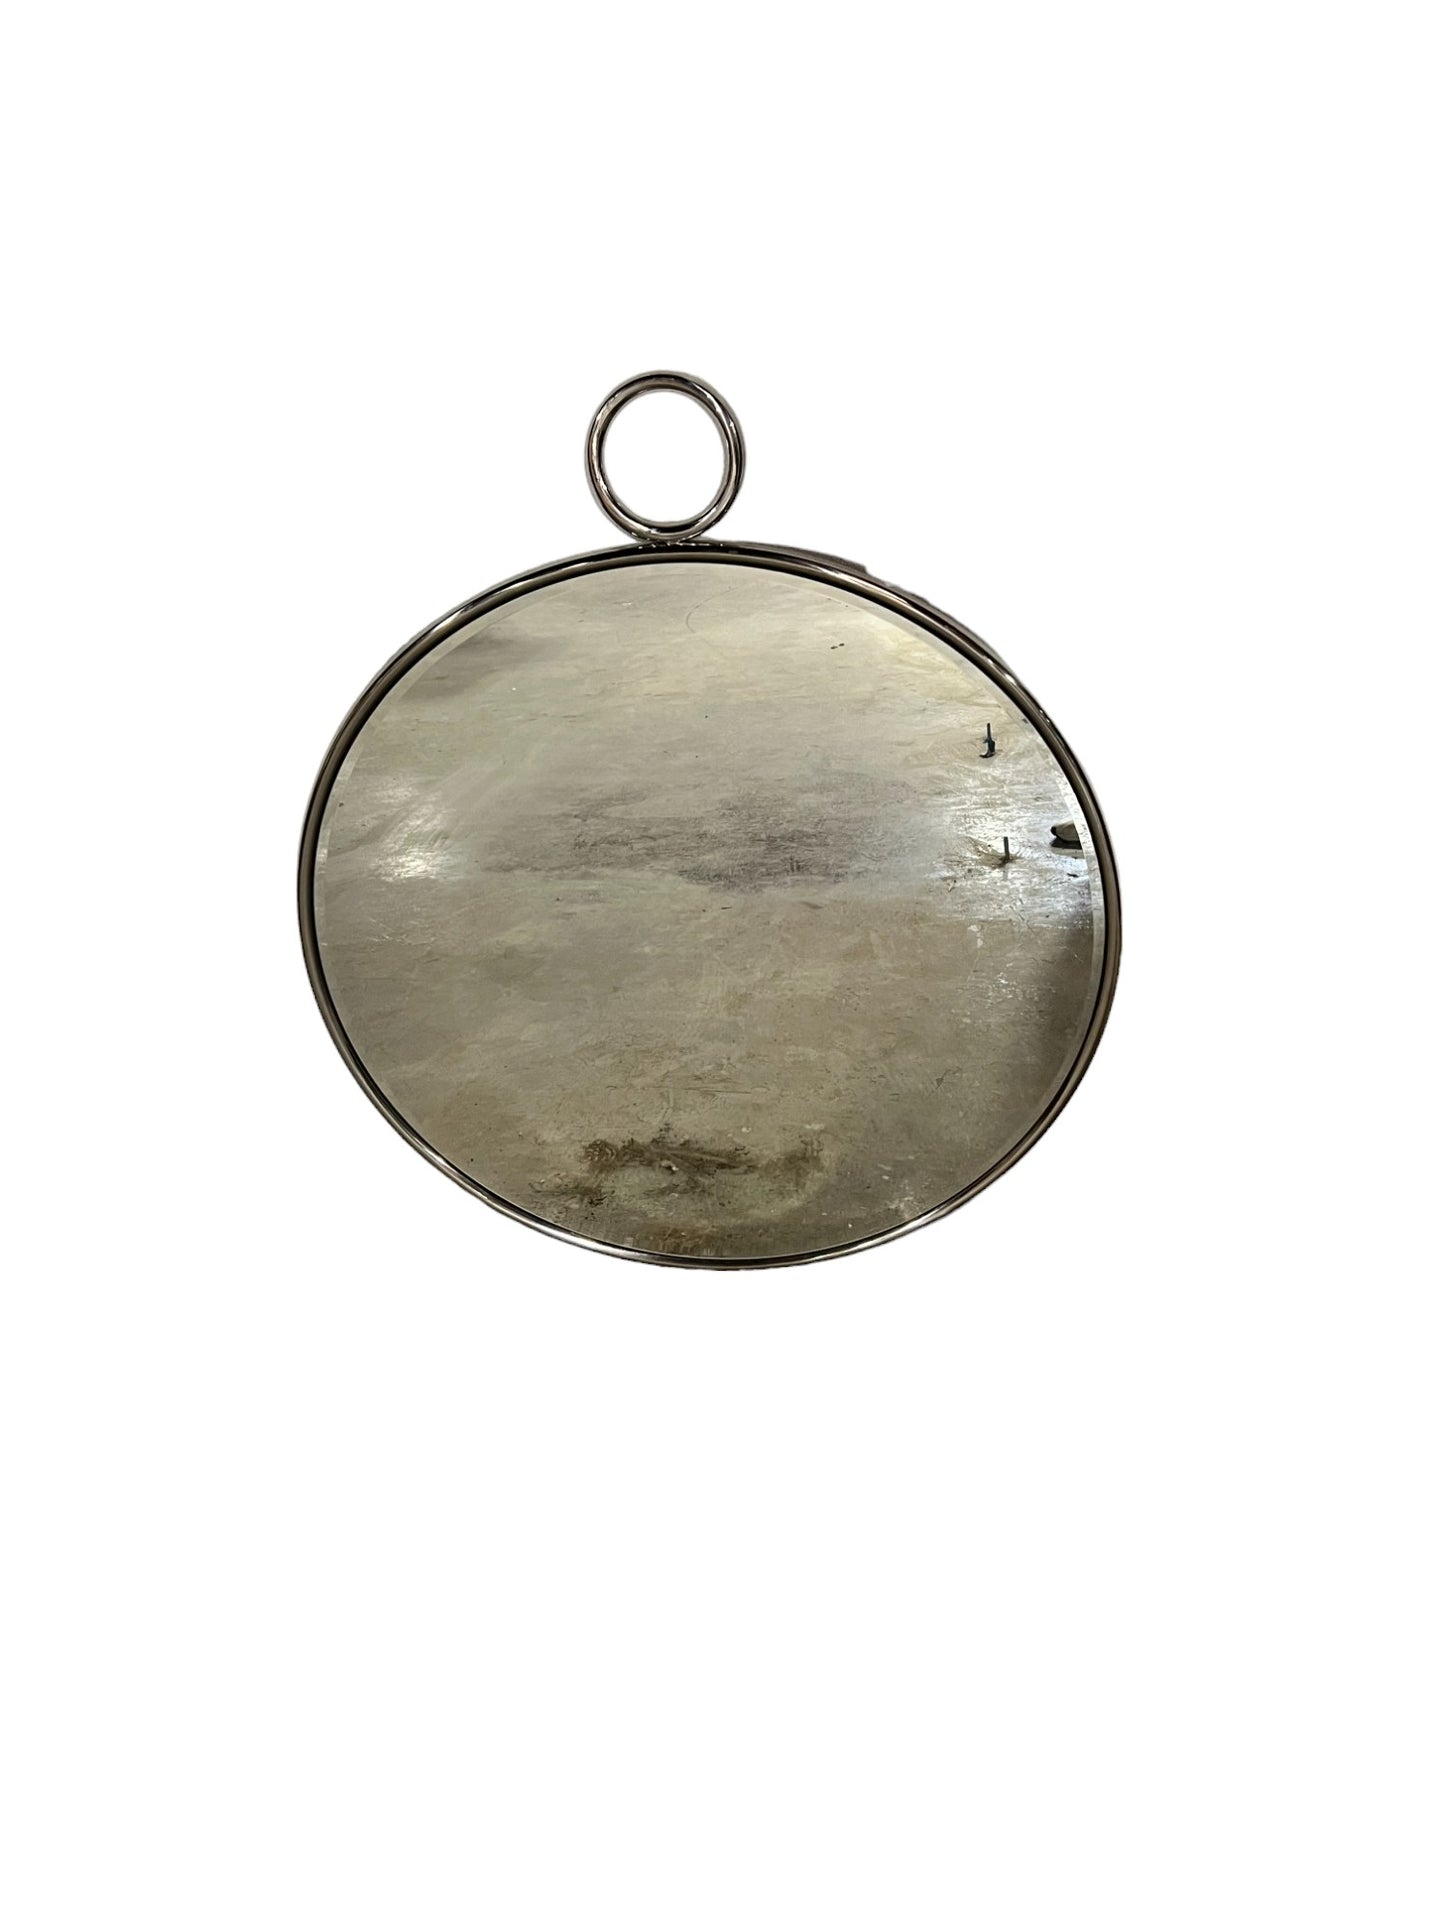 Silver Metal Round Mirror with Top Silver Loop HOP104-119